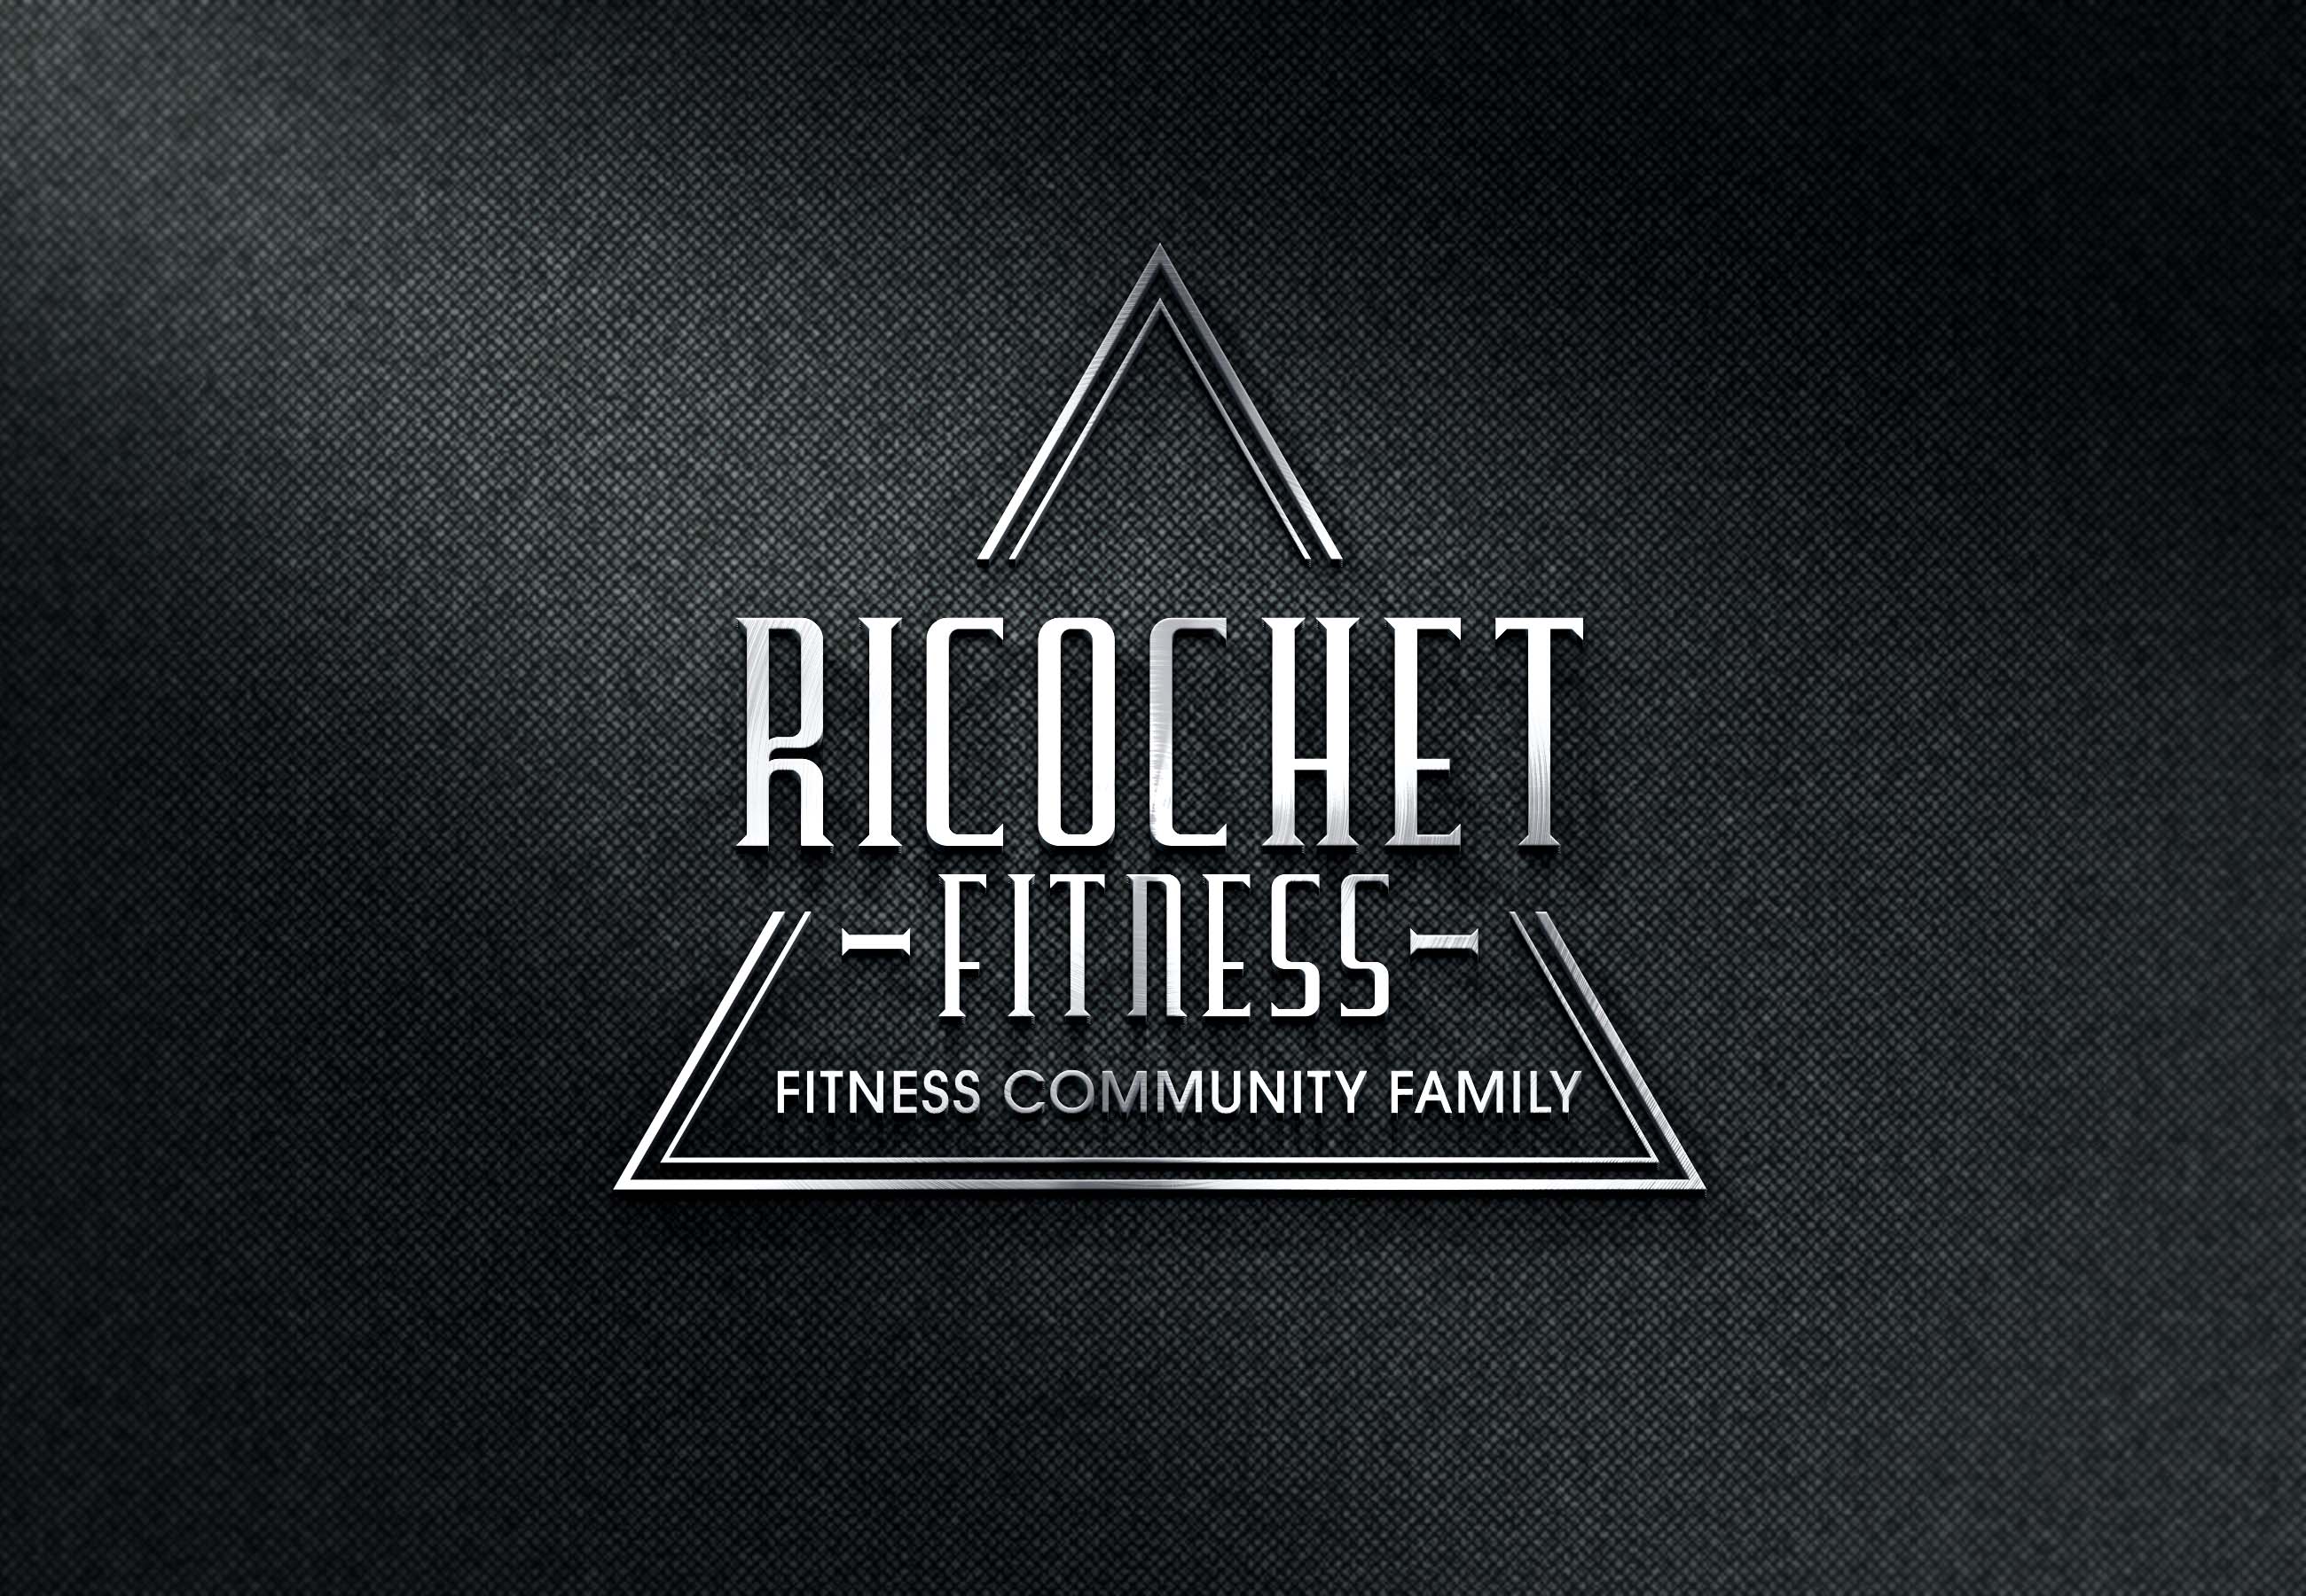 Ricochet Fitness